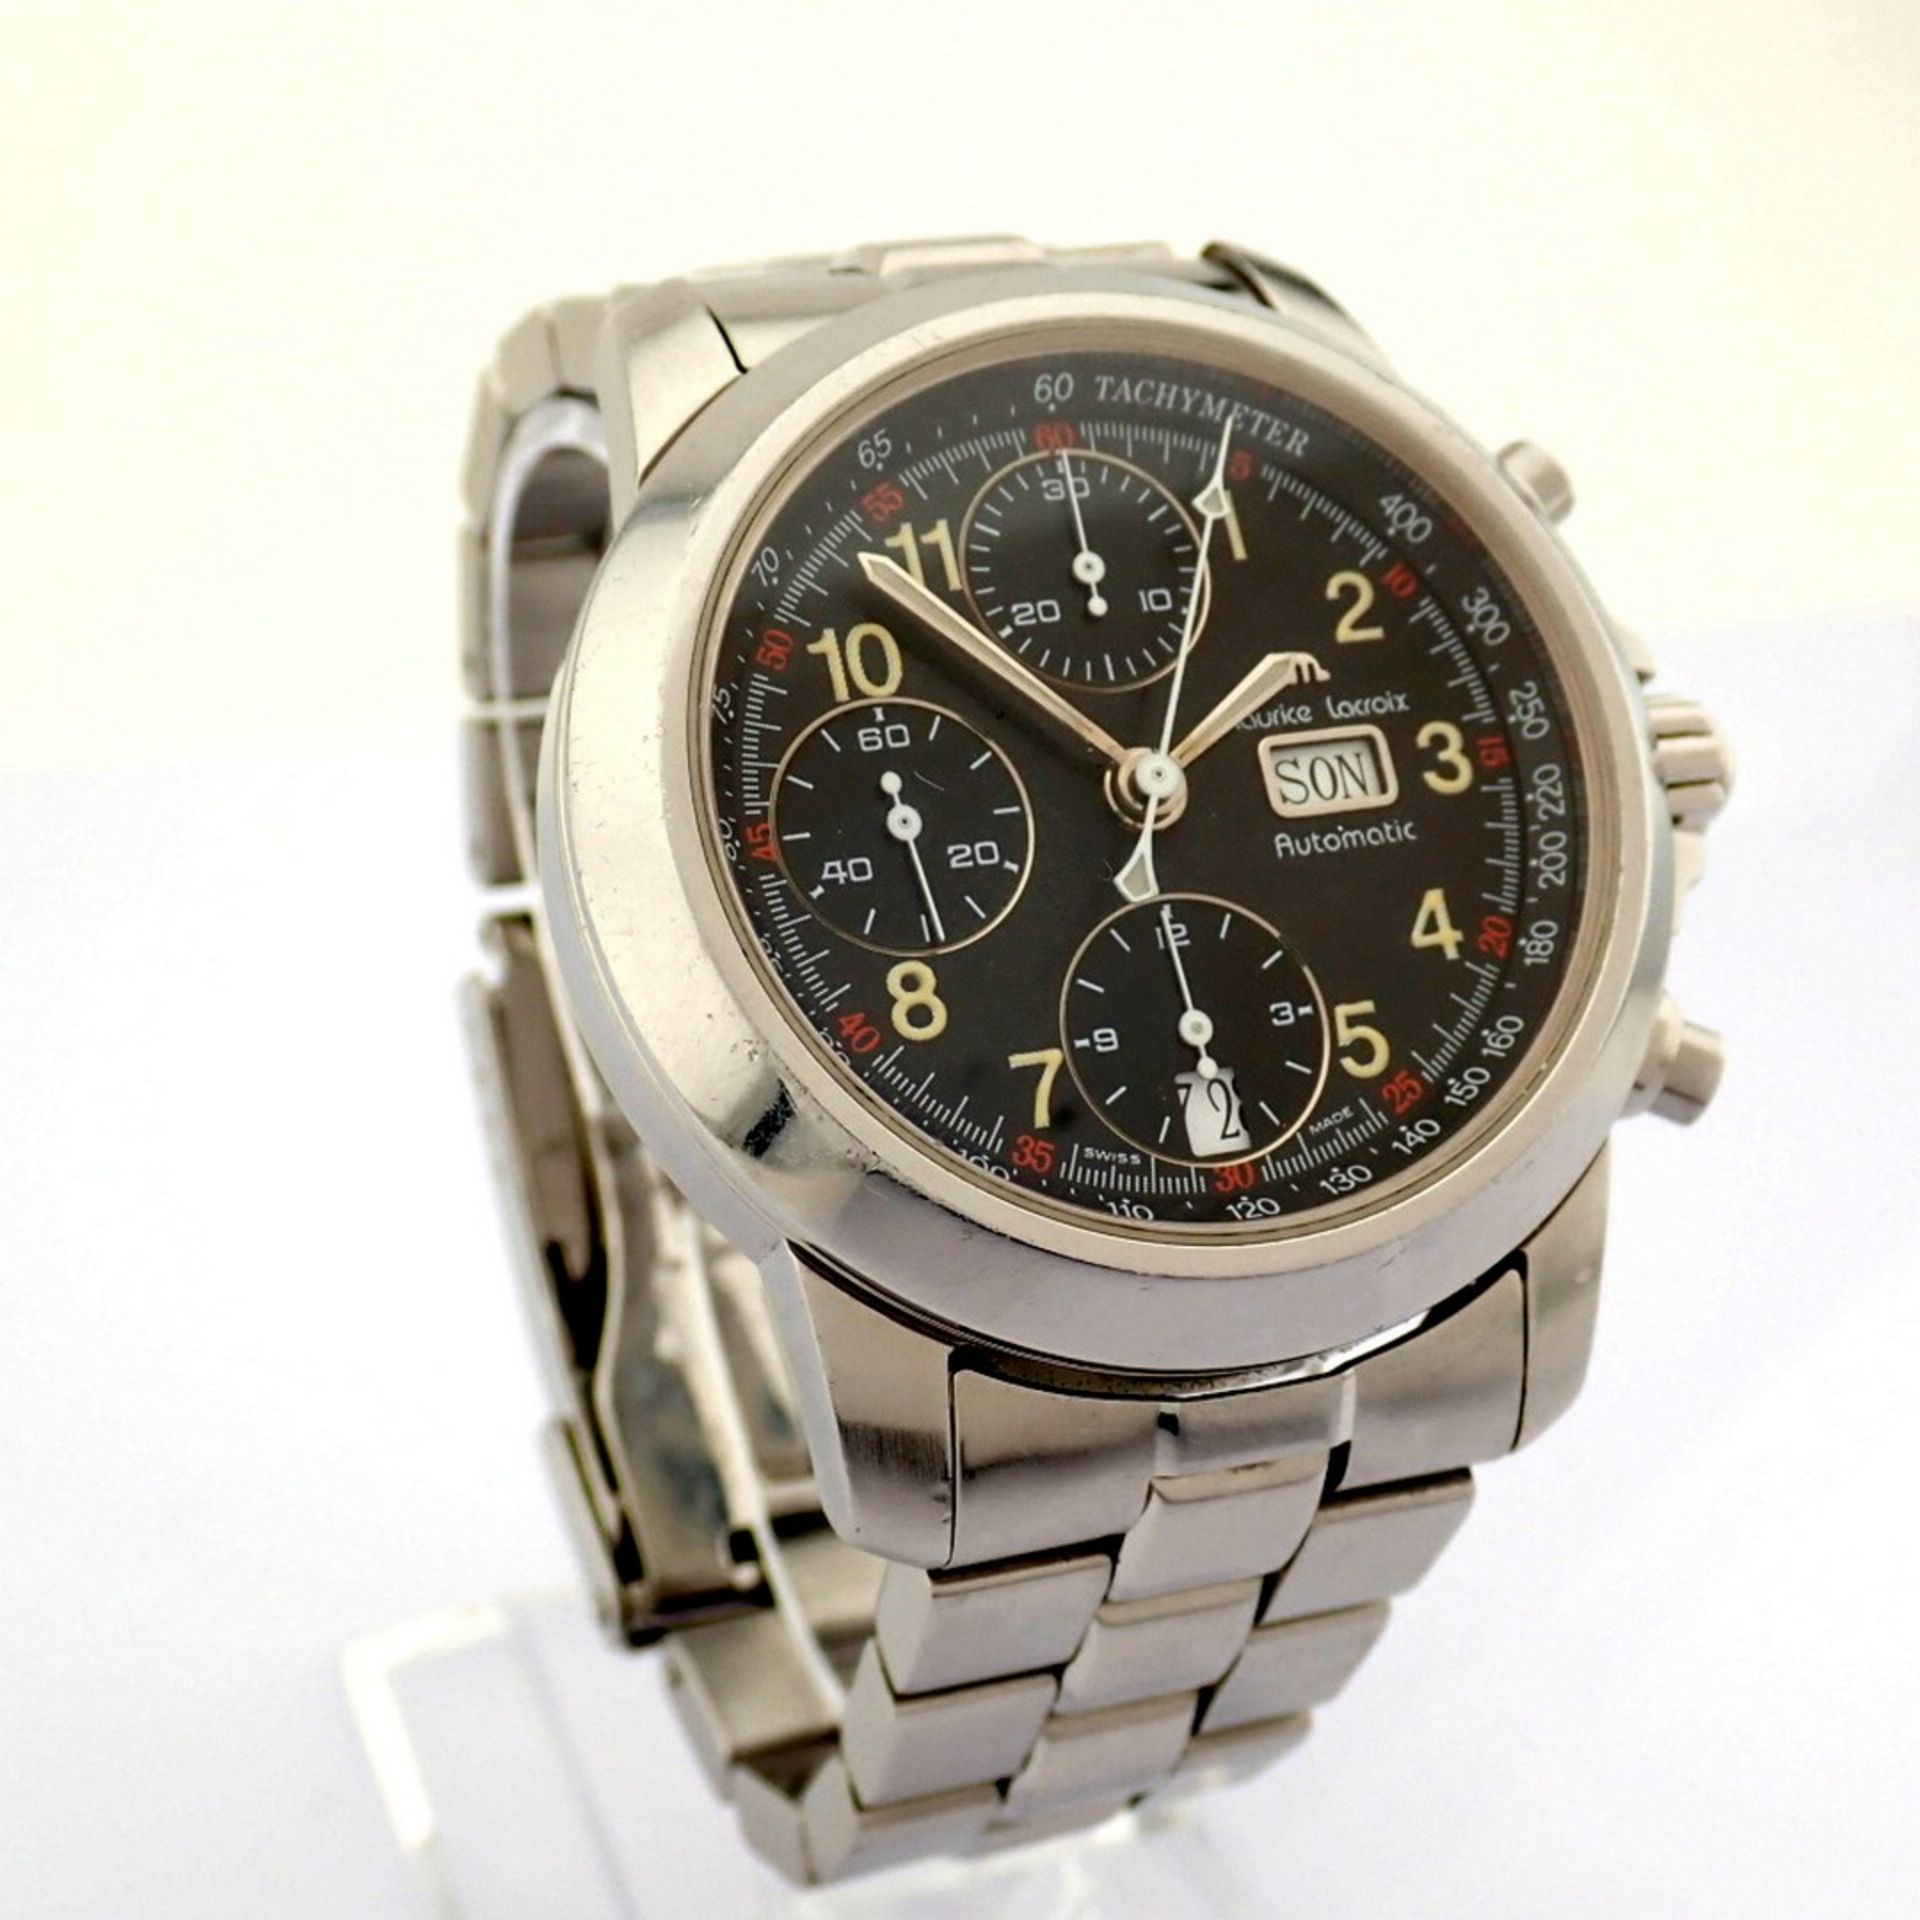 Maurice Lacroix / 39721 Automatic Chronograph - Gentlmen's Steel Wrist Watch - Image 4 of 19